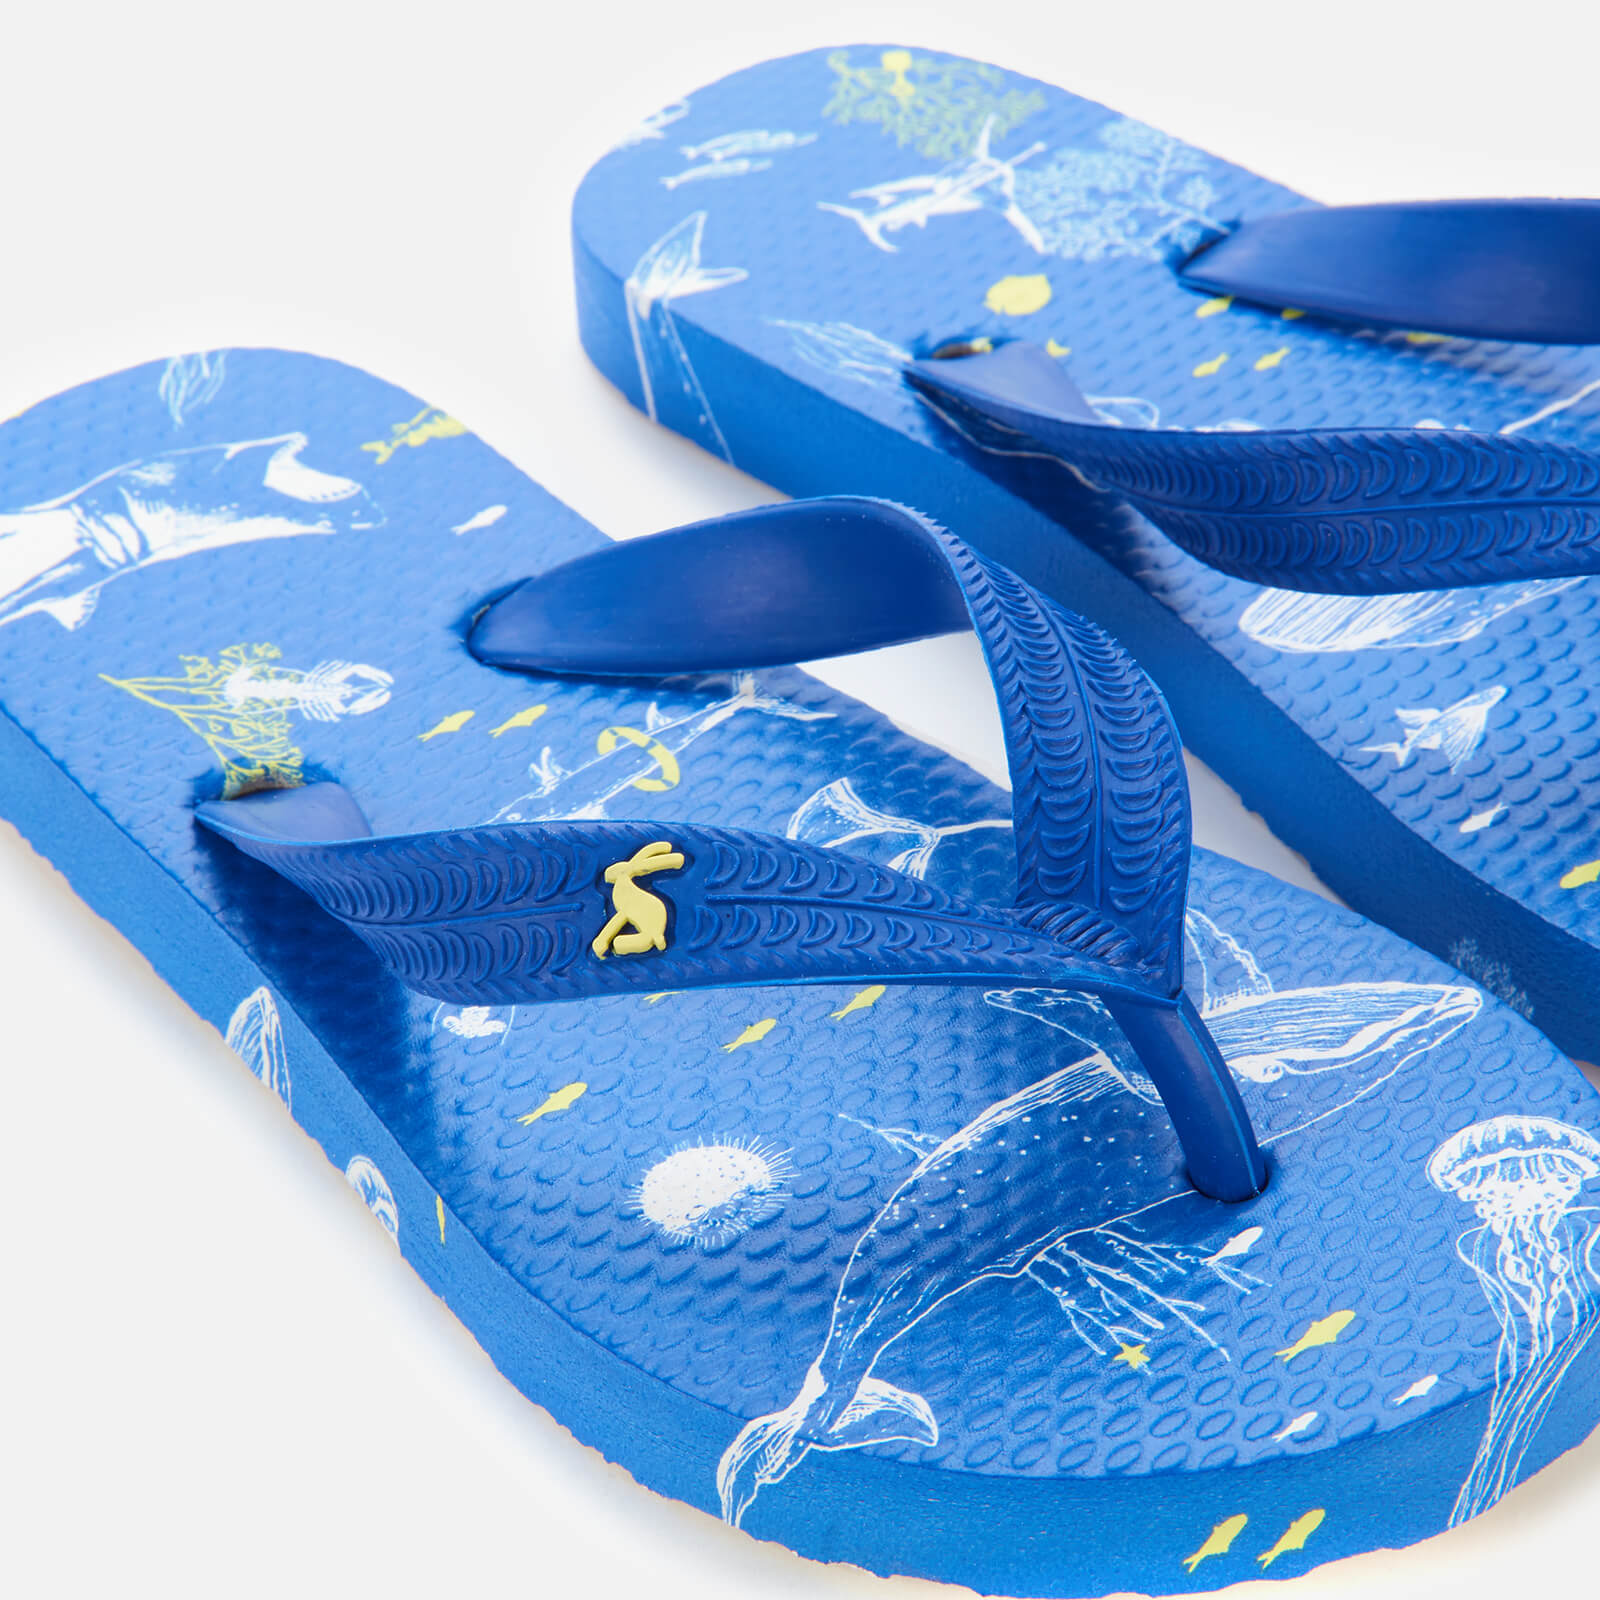 joules kids' flip flops - blue sea animals - uk 10 kids